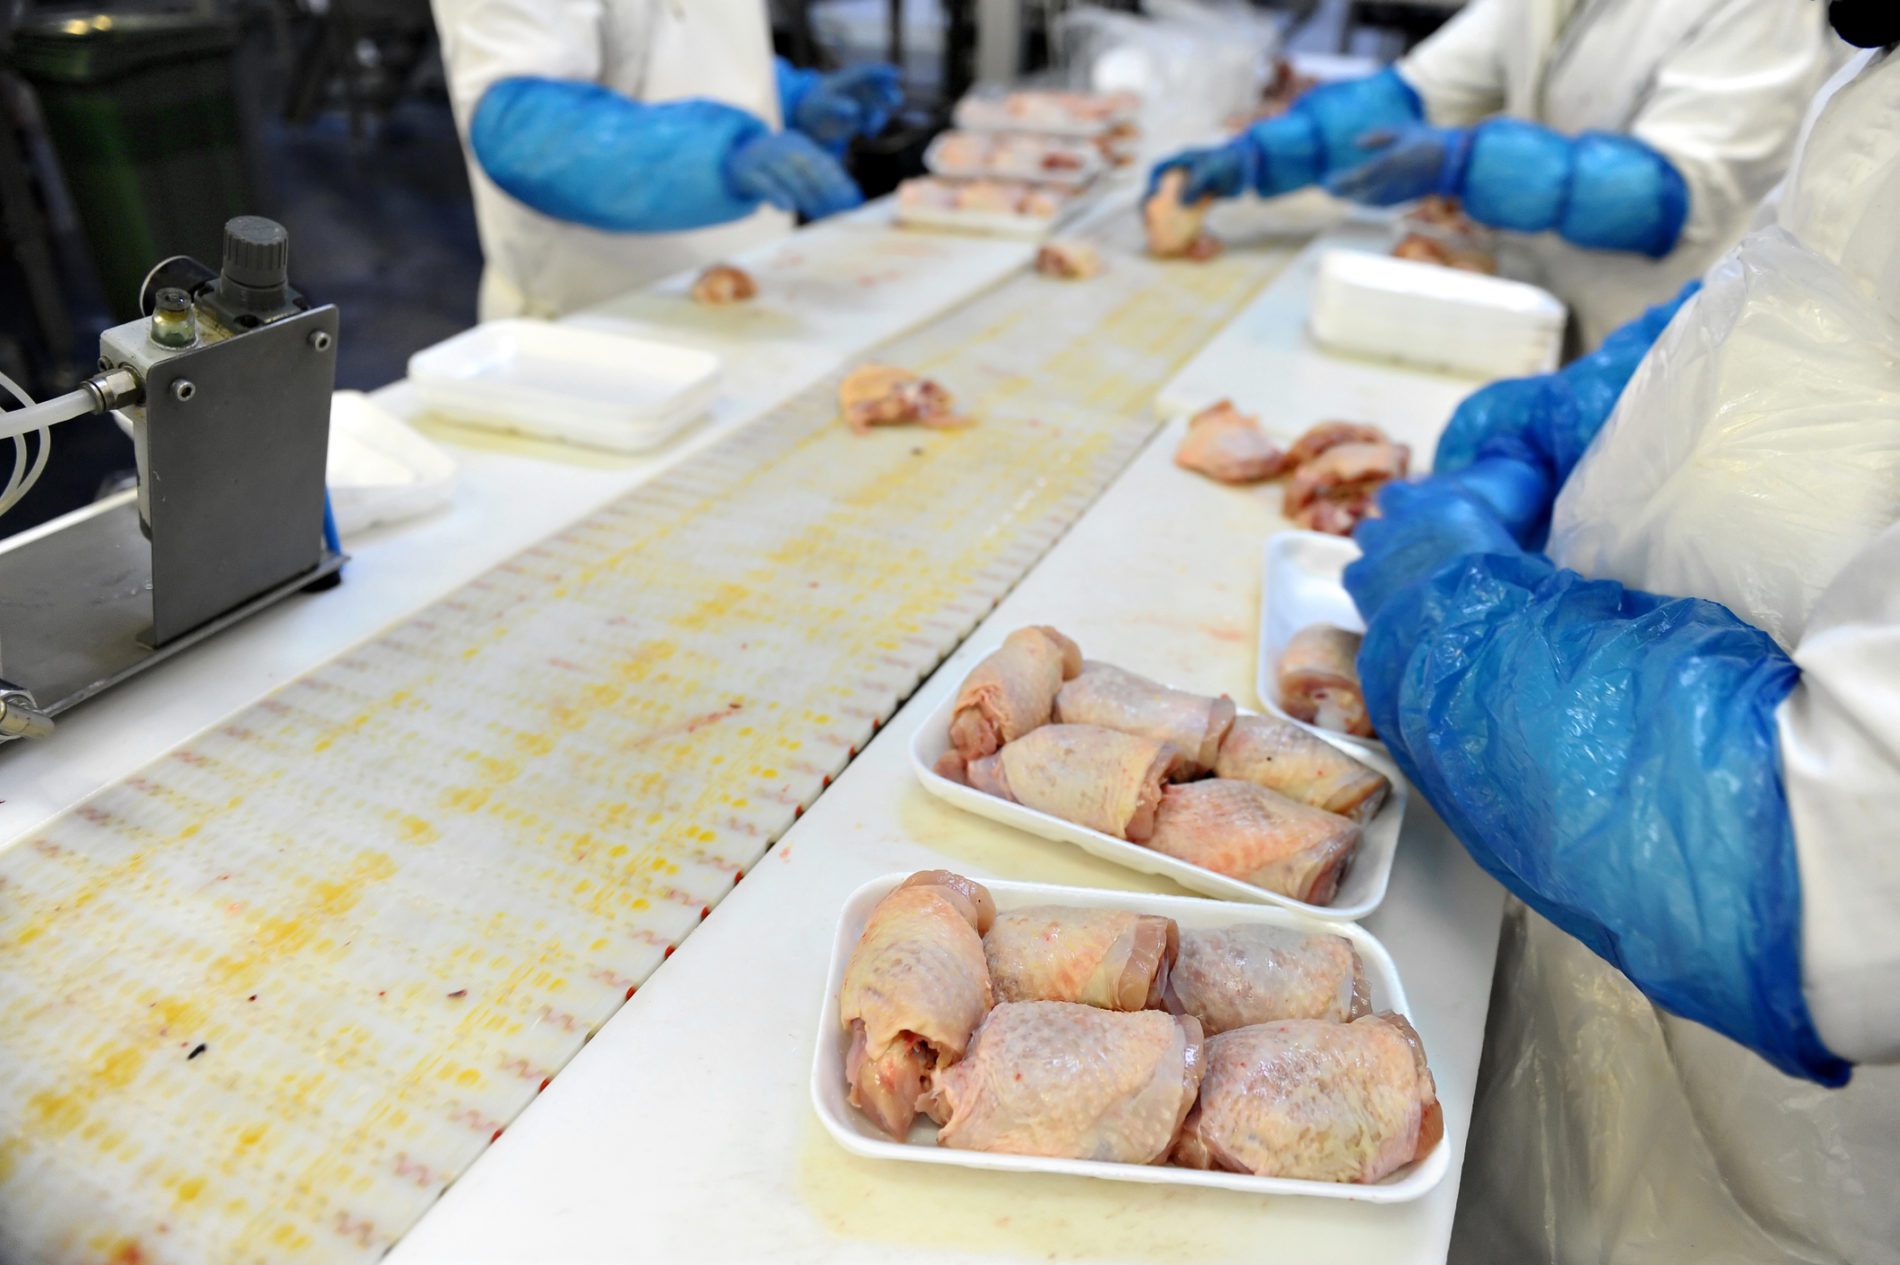 Virus exposes issues in meatpacking industry